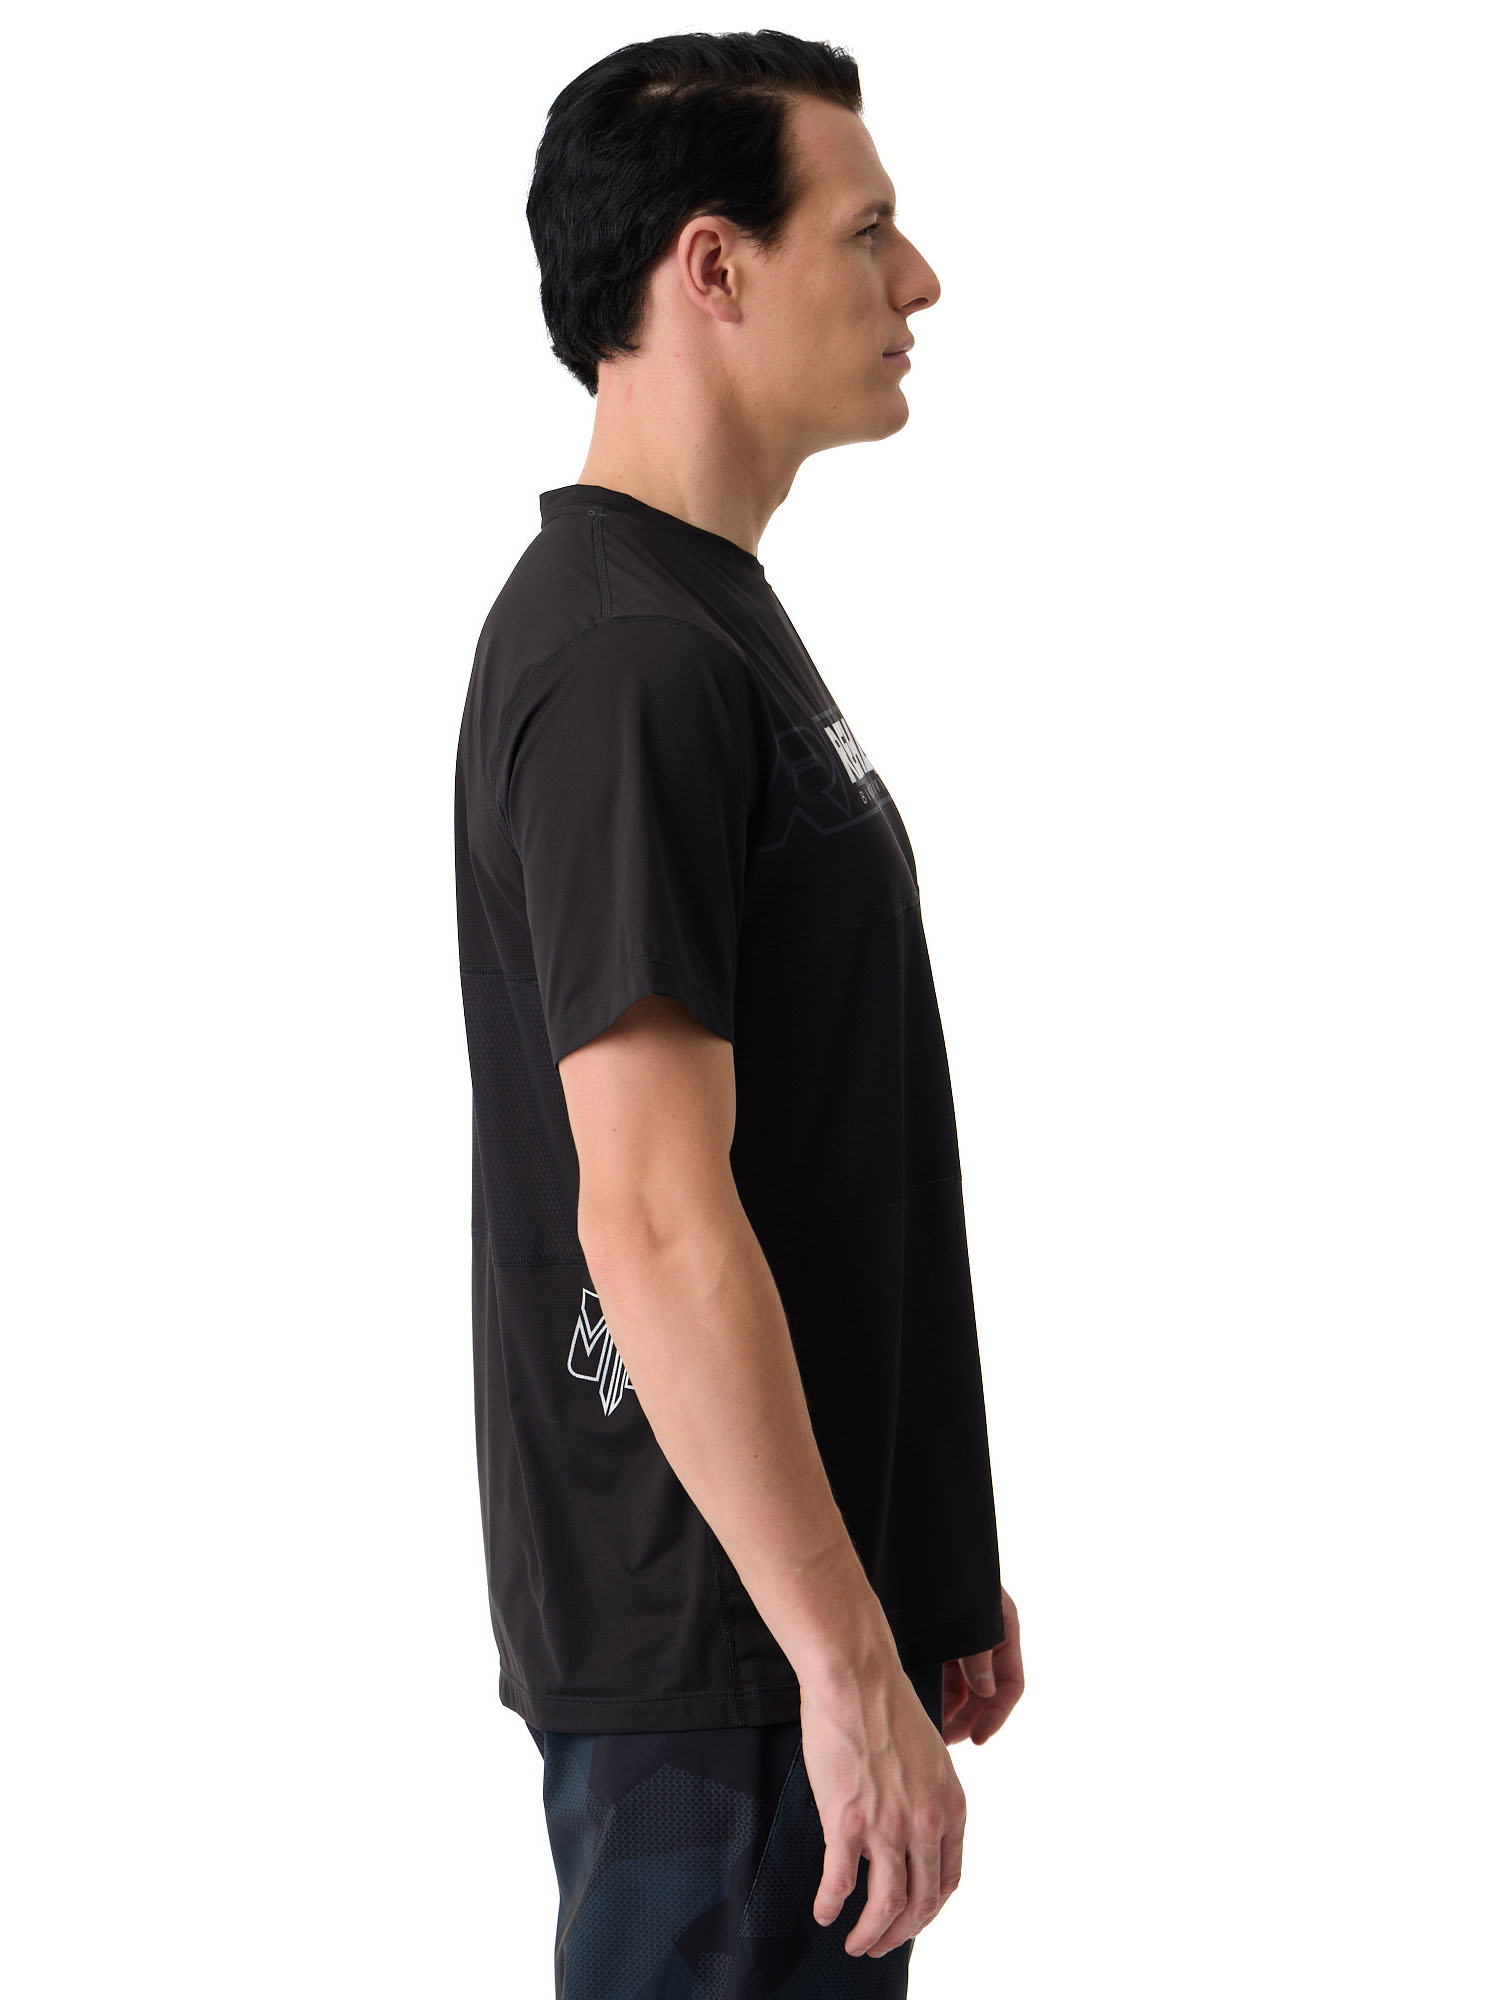 Велофутболка Rehall PHILL-R T-Shirt Short Sleeve Black